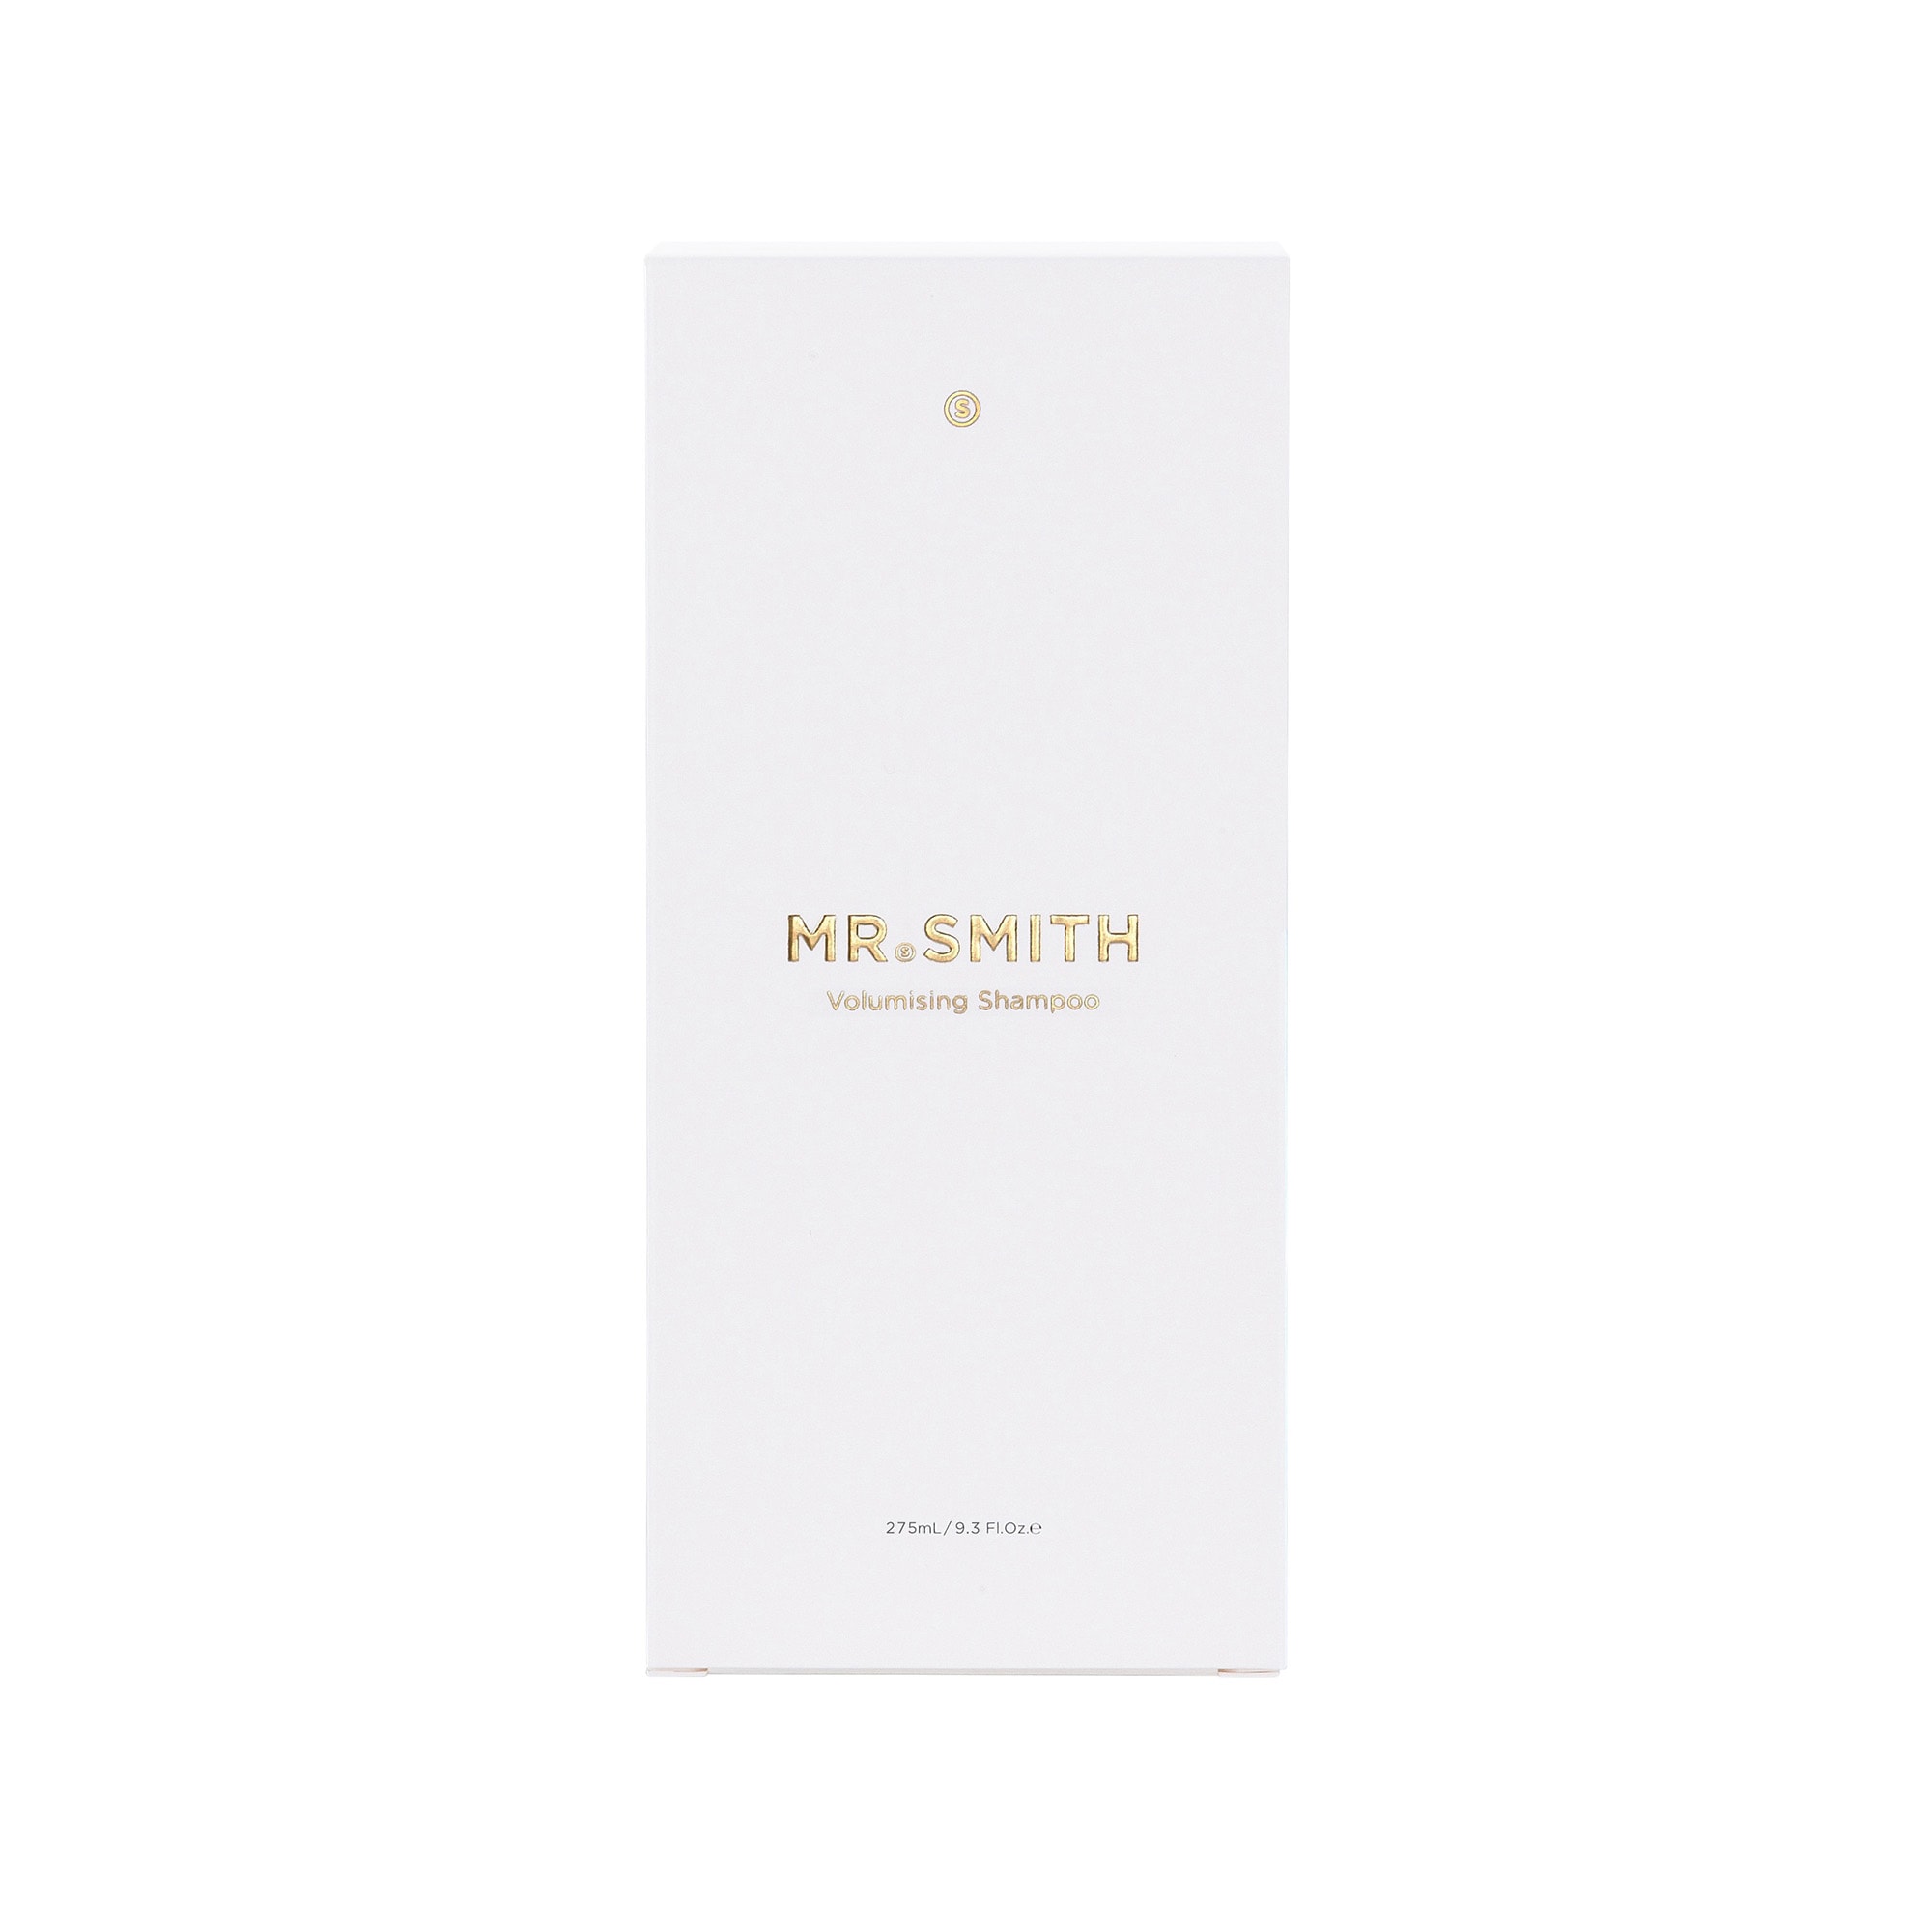 Mr.Smith Volumising Shampoo Carton